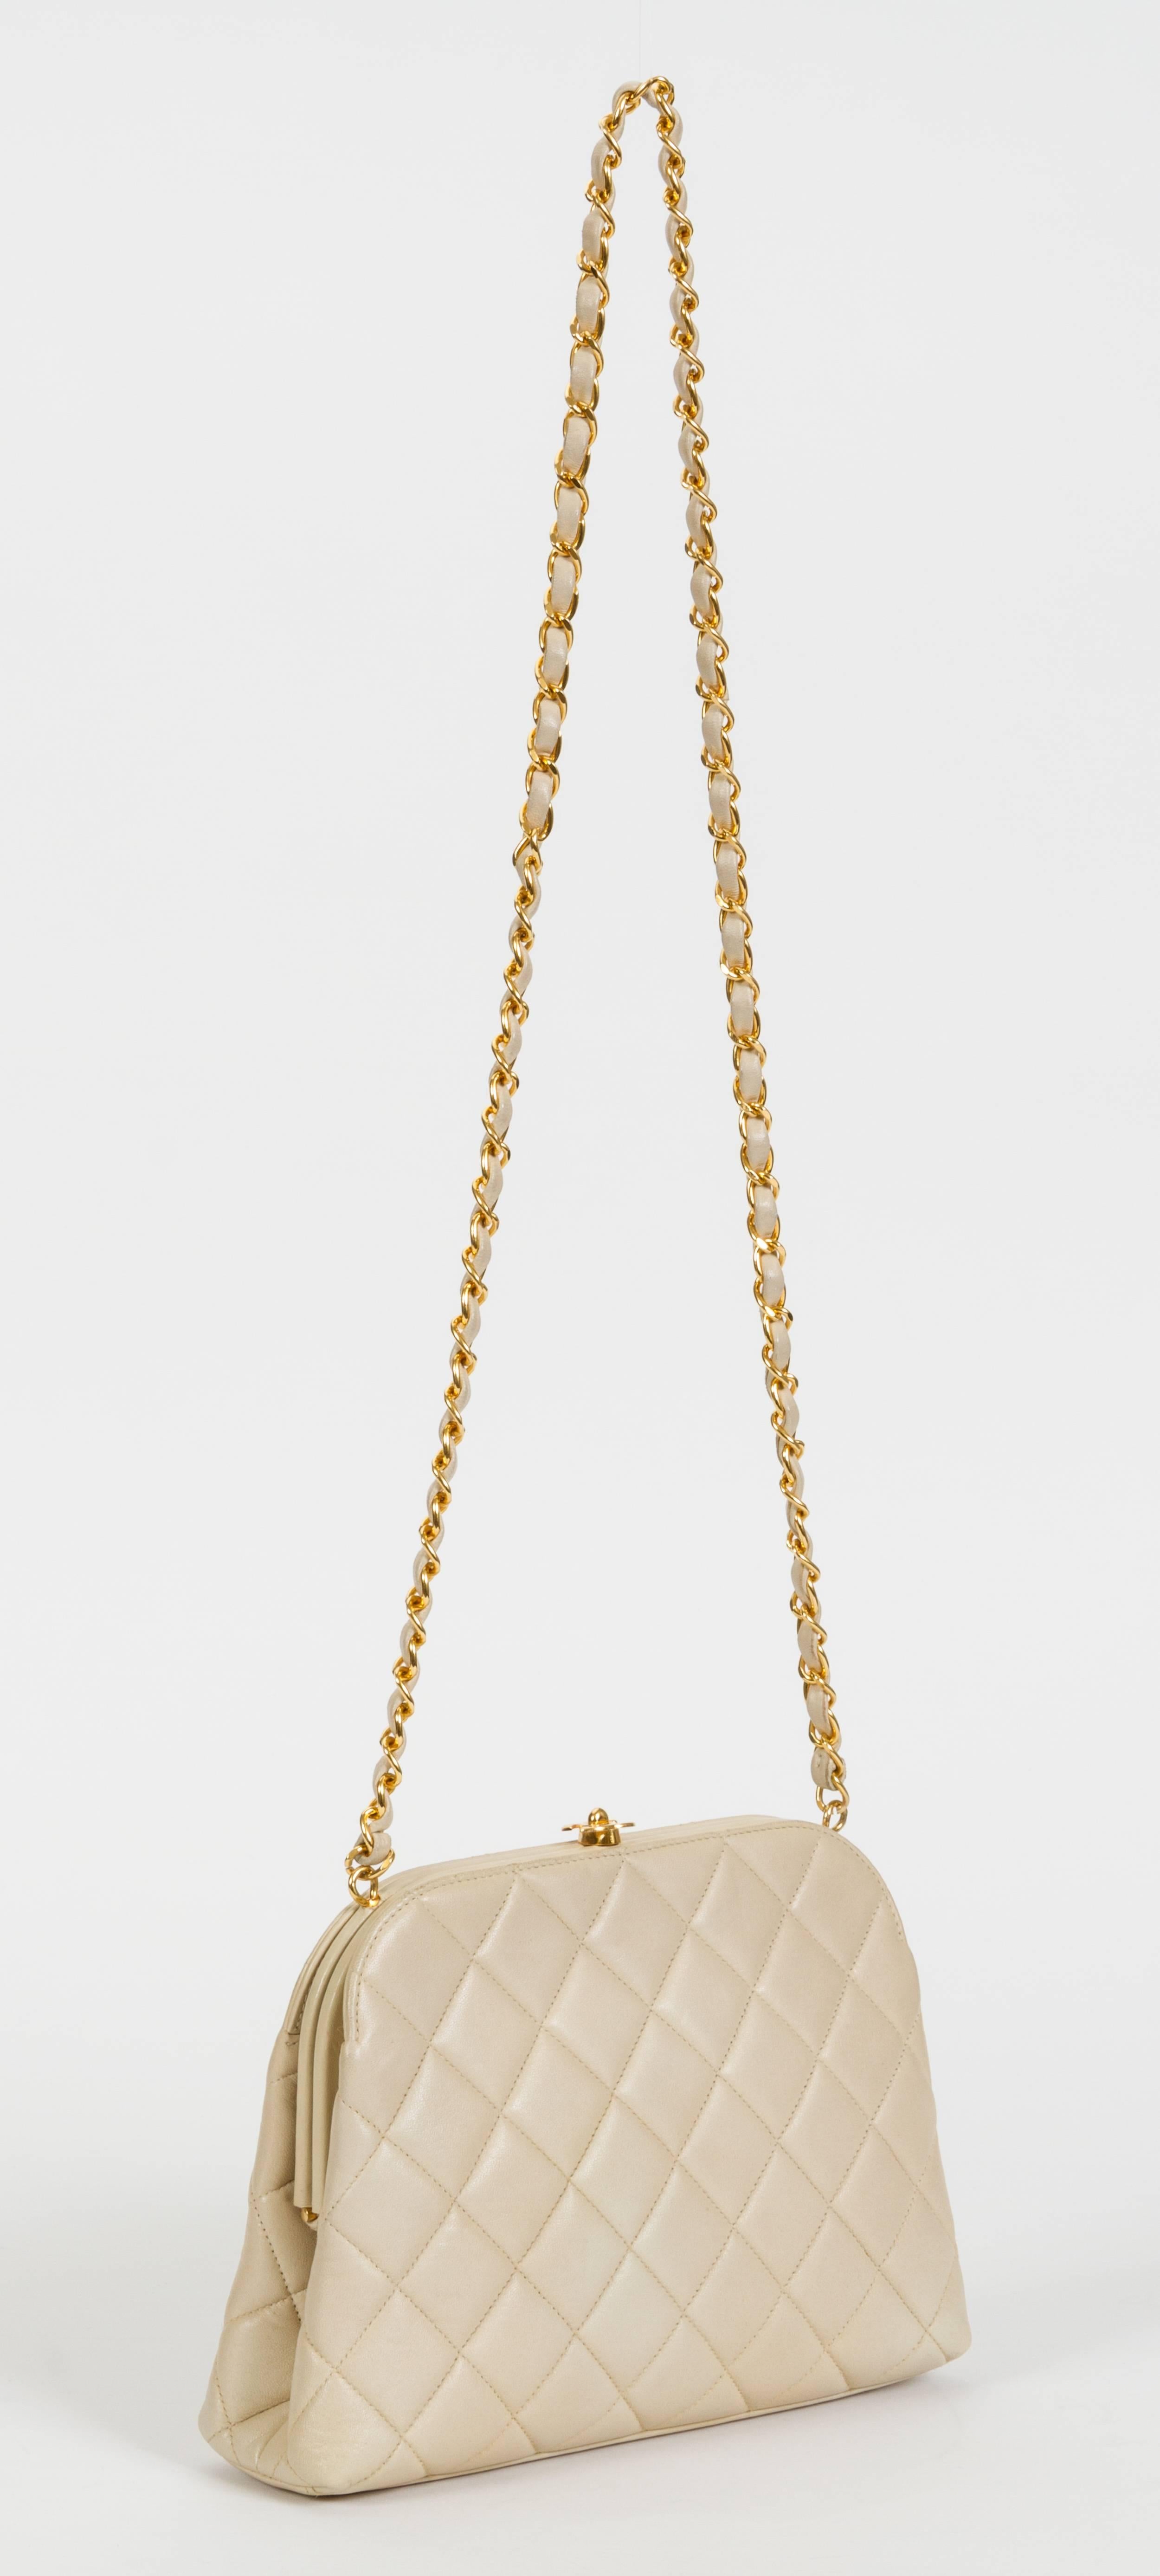 Chanel beige quilted shoulder bag with kiss-lock logo clasp. Shoulder drop, 19